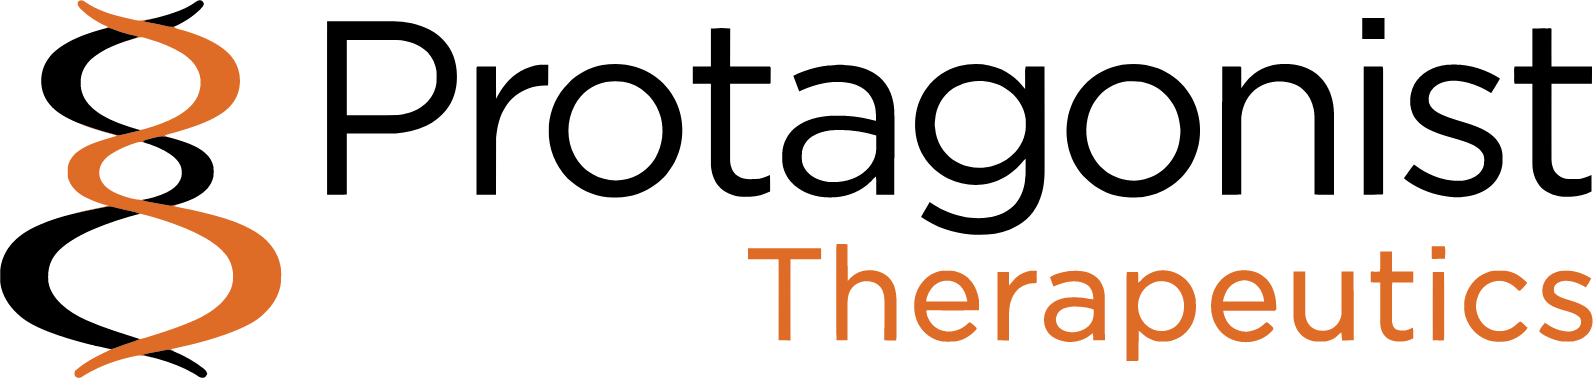 Protagonist Therapeutics
 logo large (transparent PNG)